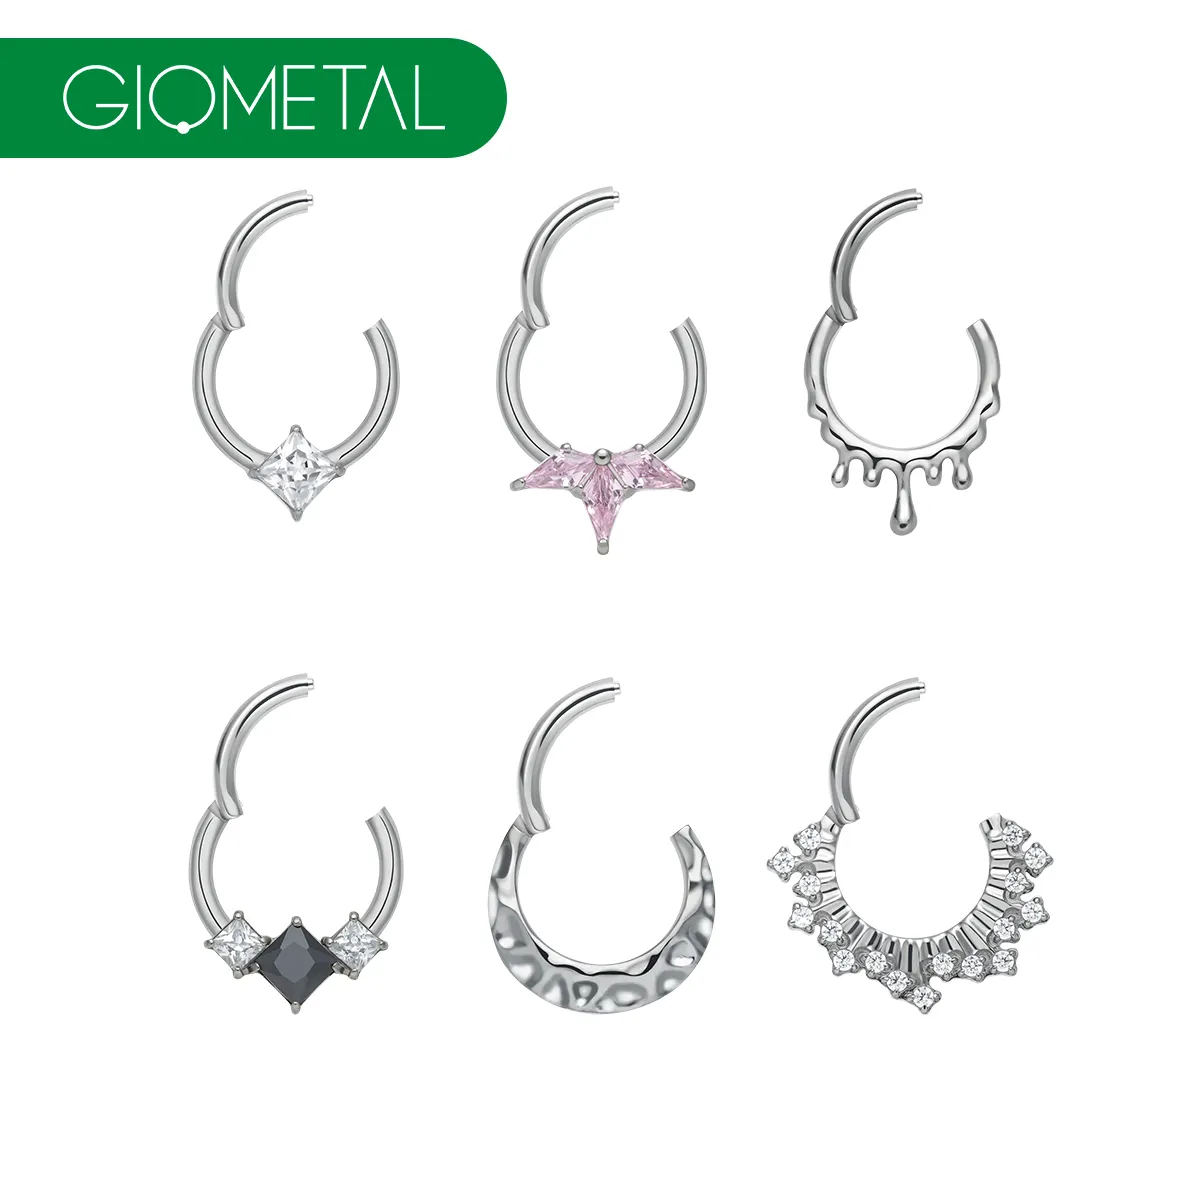 Giometal 16G ASTM F136 Implant Mirror High Polish Titanium Gemmed Septum Clicker Nose G23 Piercing Body Jewelry Wholesale